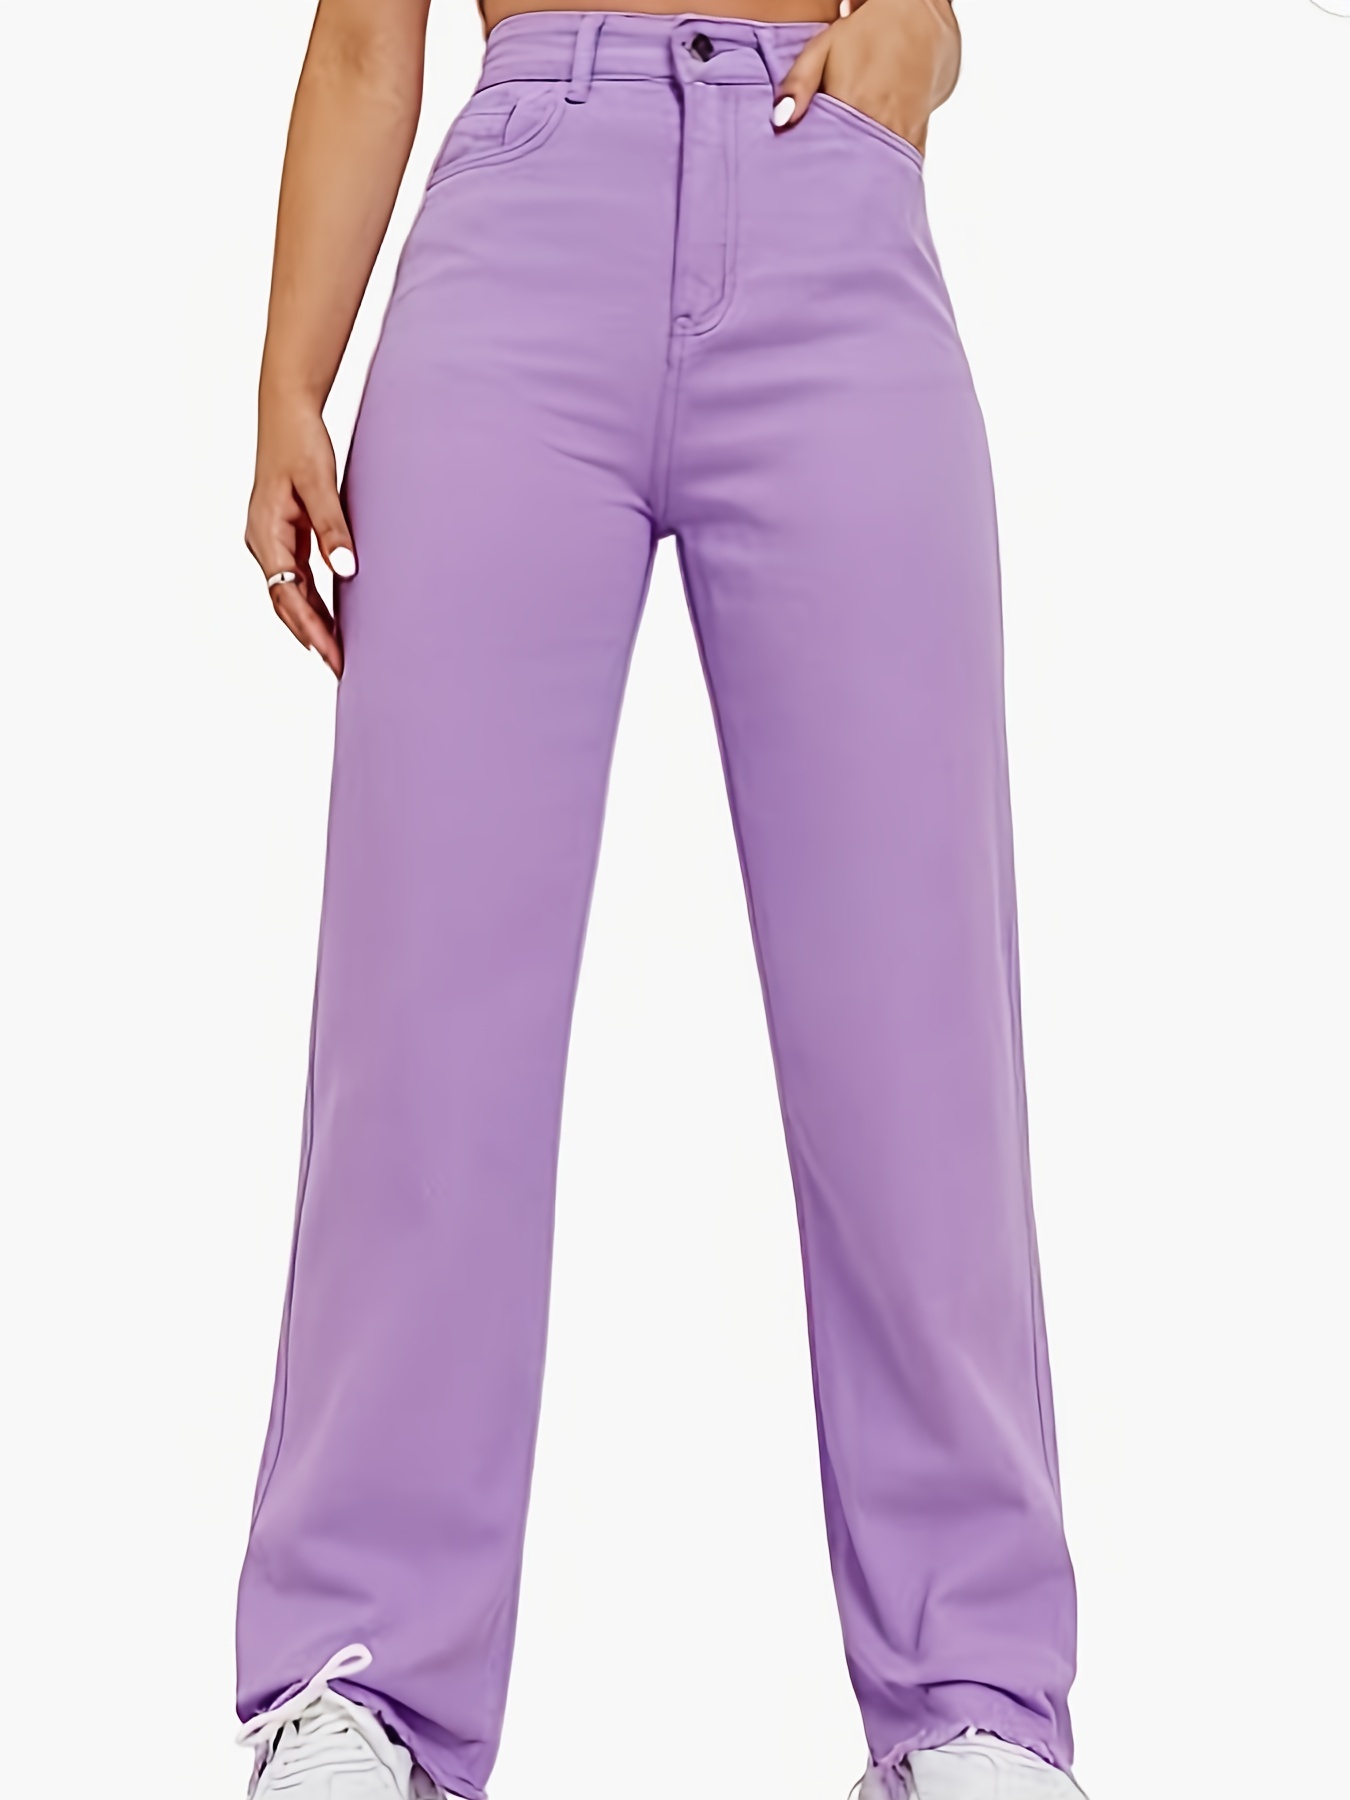 Purple Brand Straight-Leg Jeans w/ Tags - Blue, 14 Rise Jeans